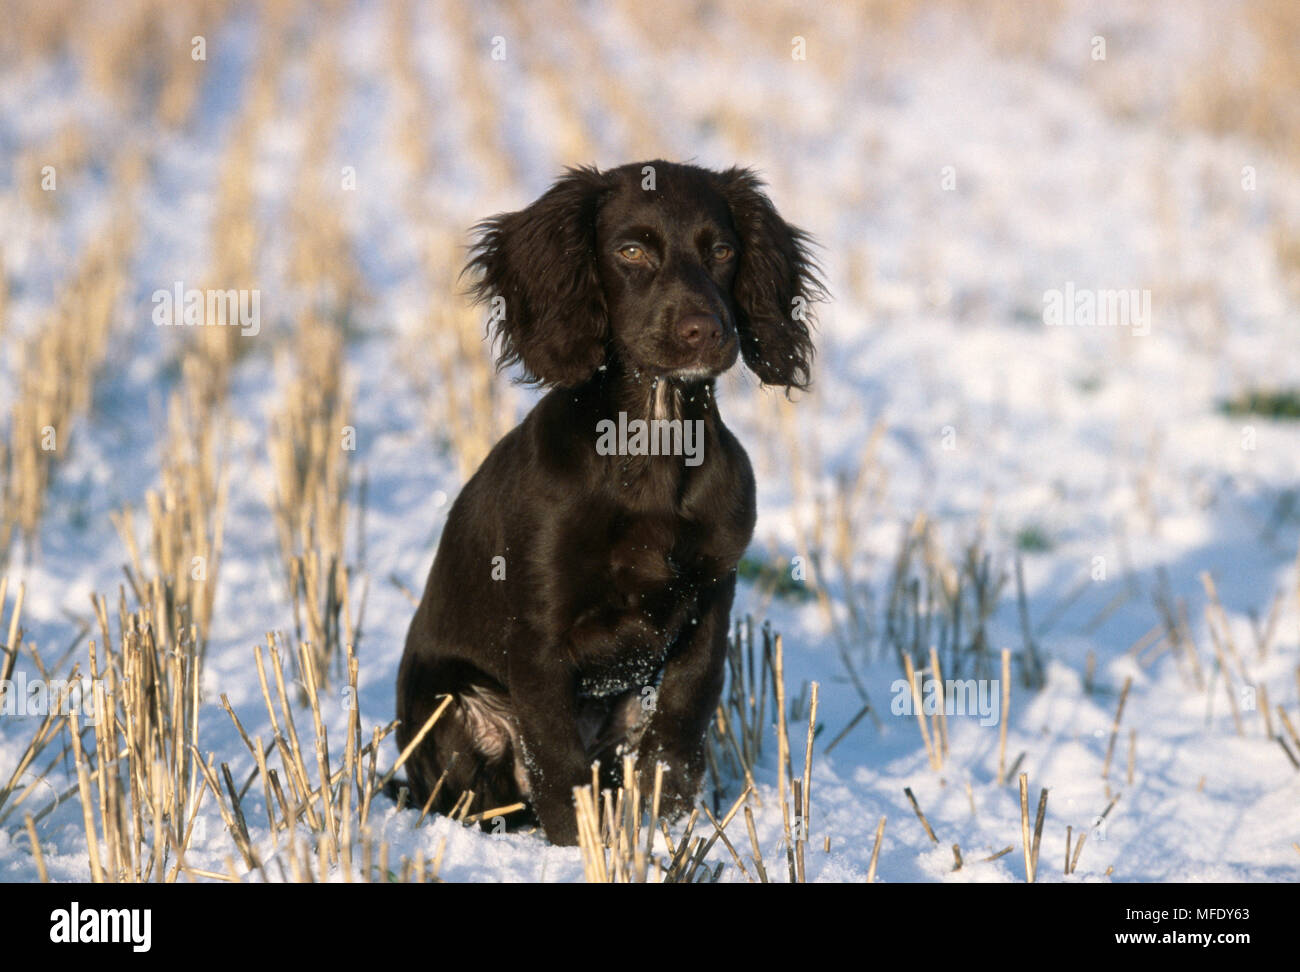 COCKER SPANIEL puppy sitting in snow Stock Photo